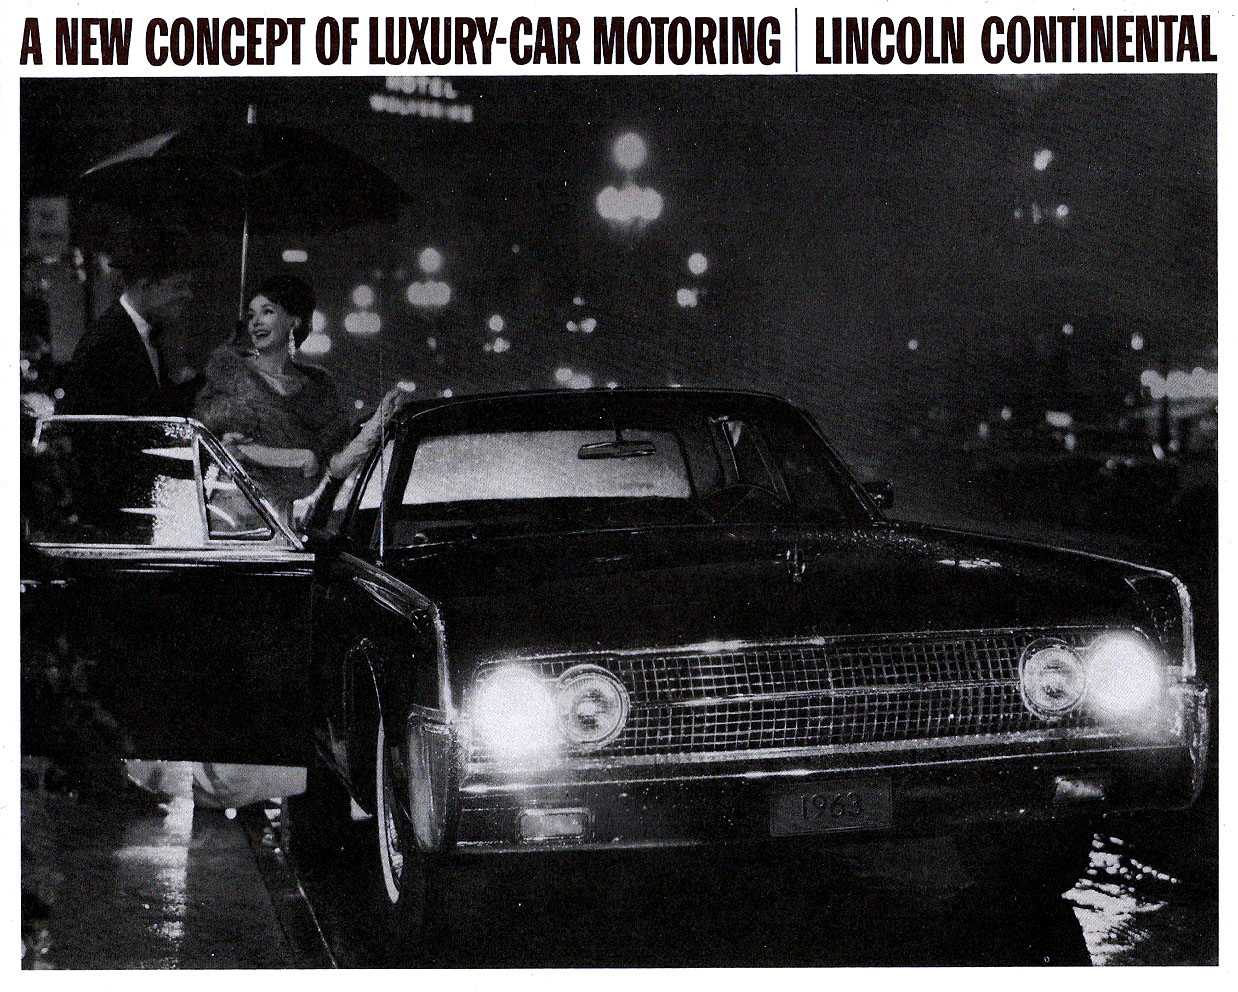 n_1963 Lincoln Continental B&W-01.jpg